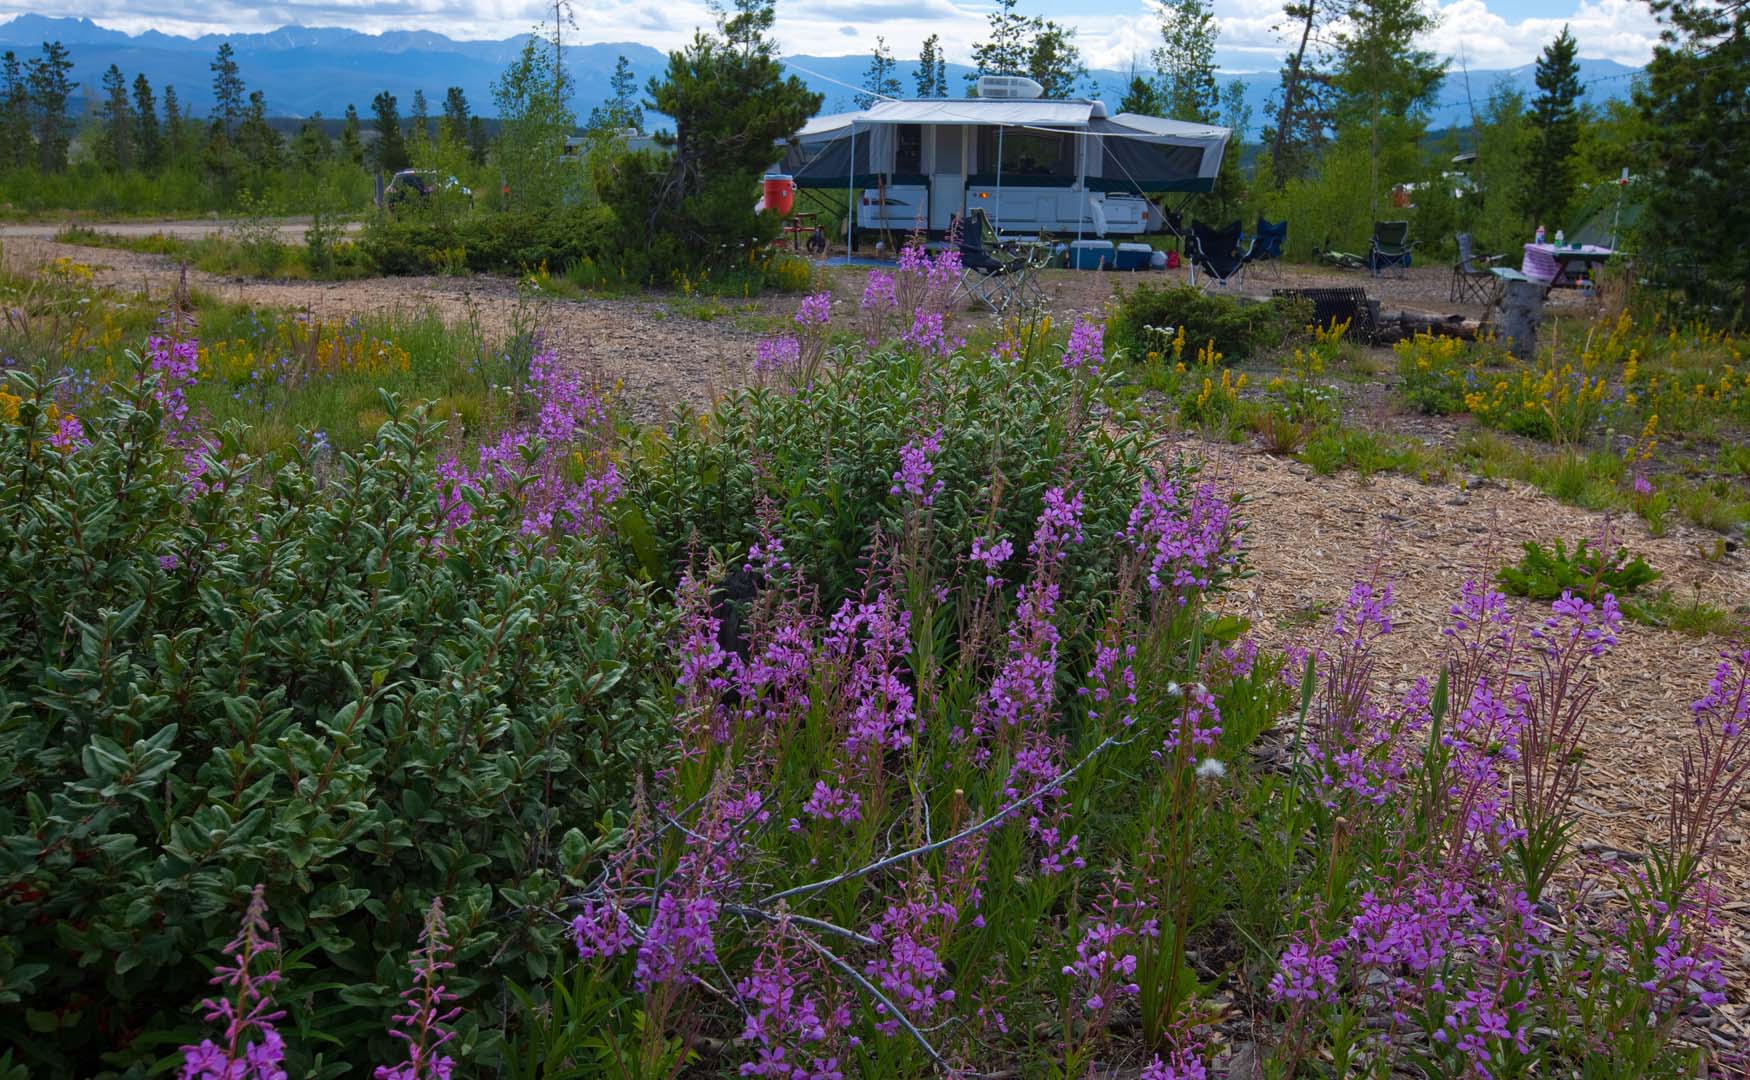 wildflowers next to campground set up